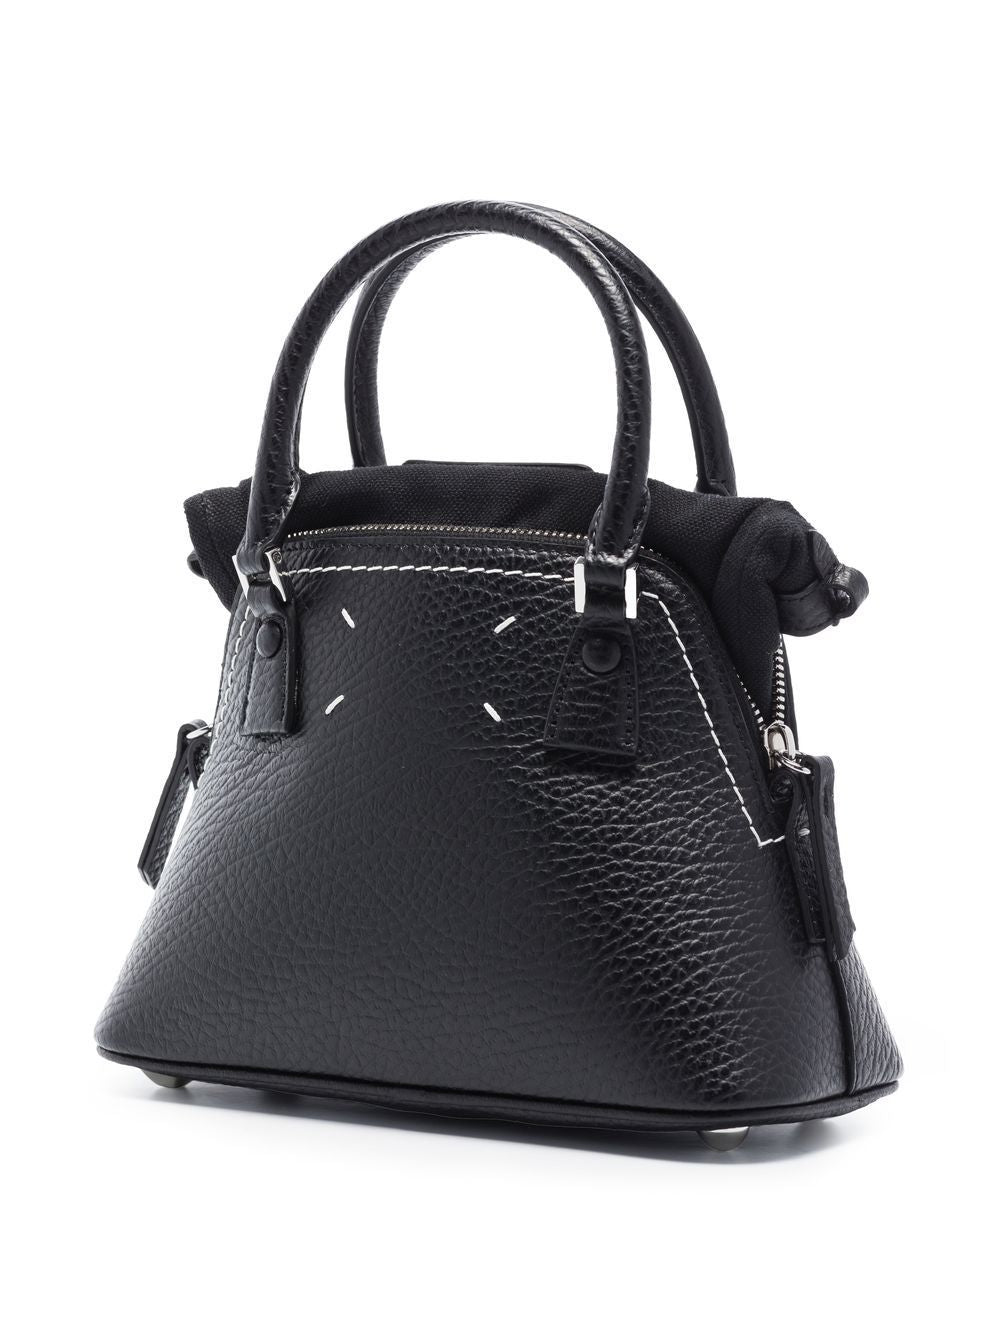 Shop Maison Margiela Luxurious Black Leather Tote Handbag